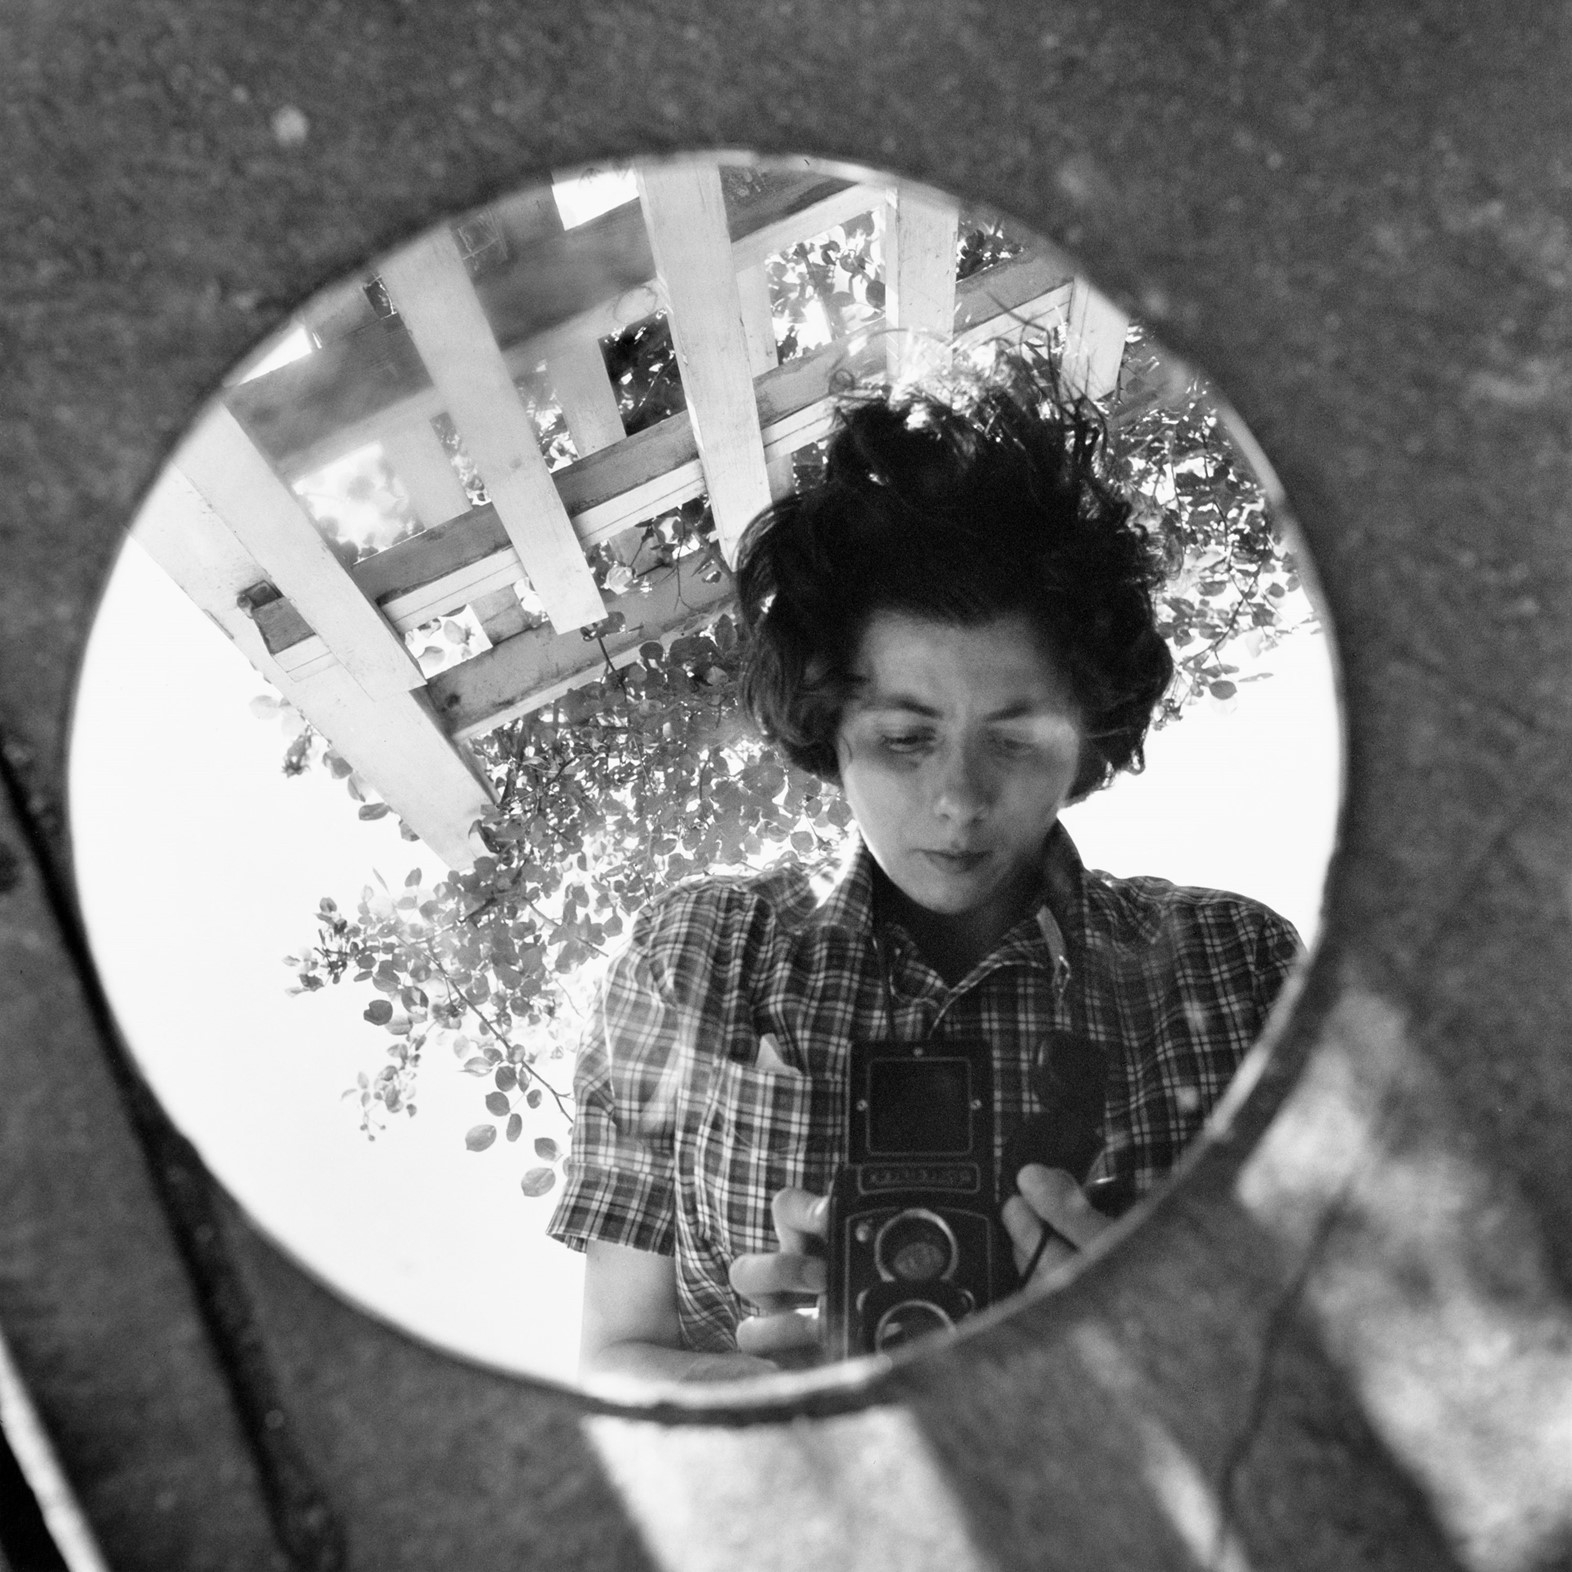 Inside Vivian Maier's secret archive of street photography | Dazed